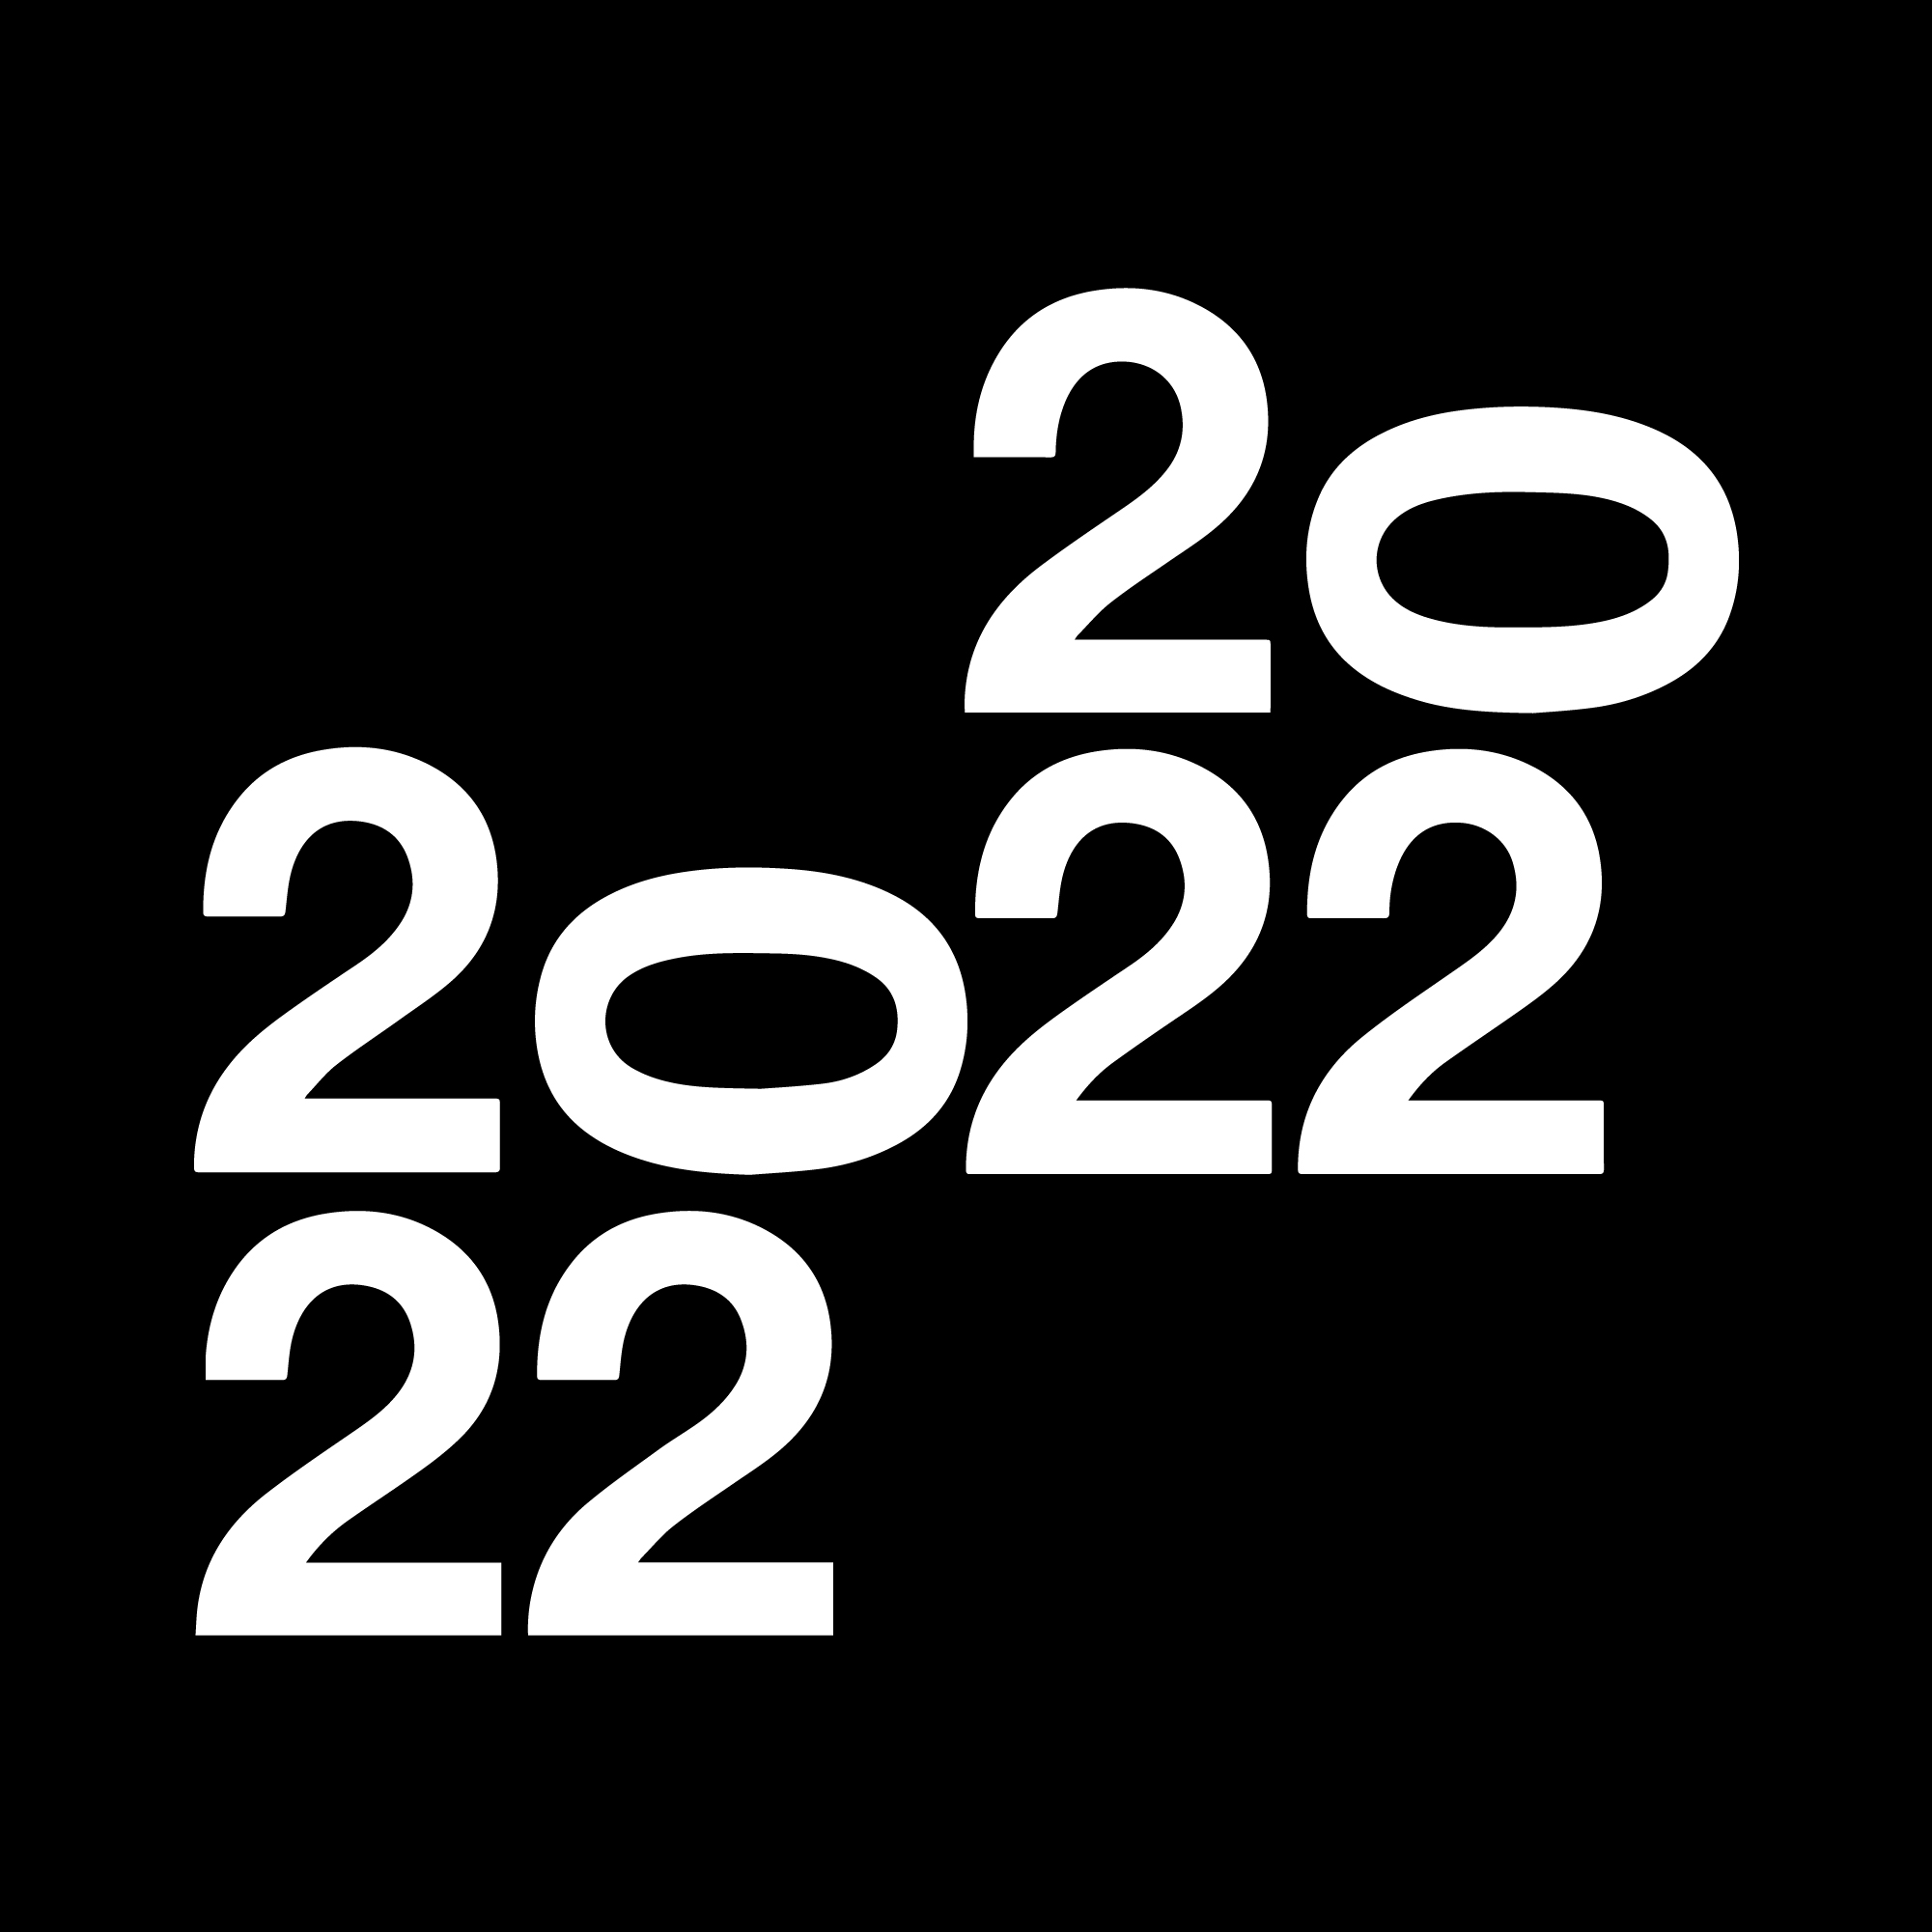 2022 - negativo (2022)